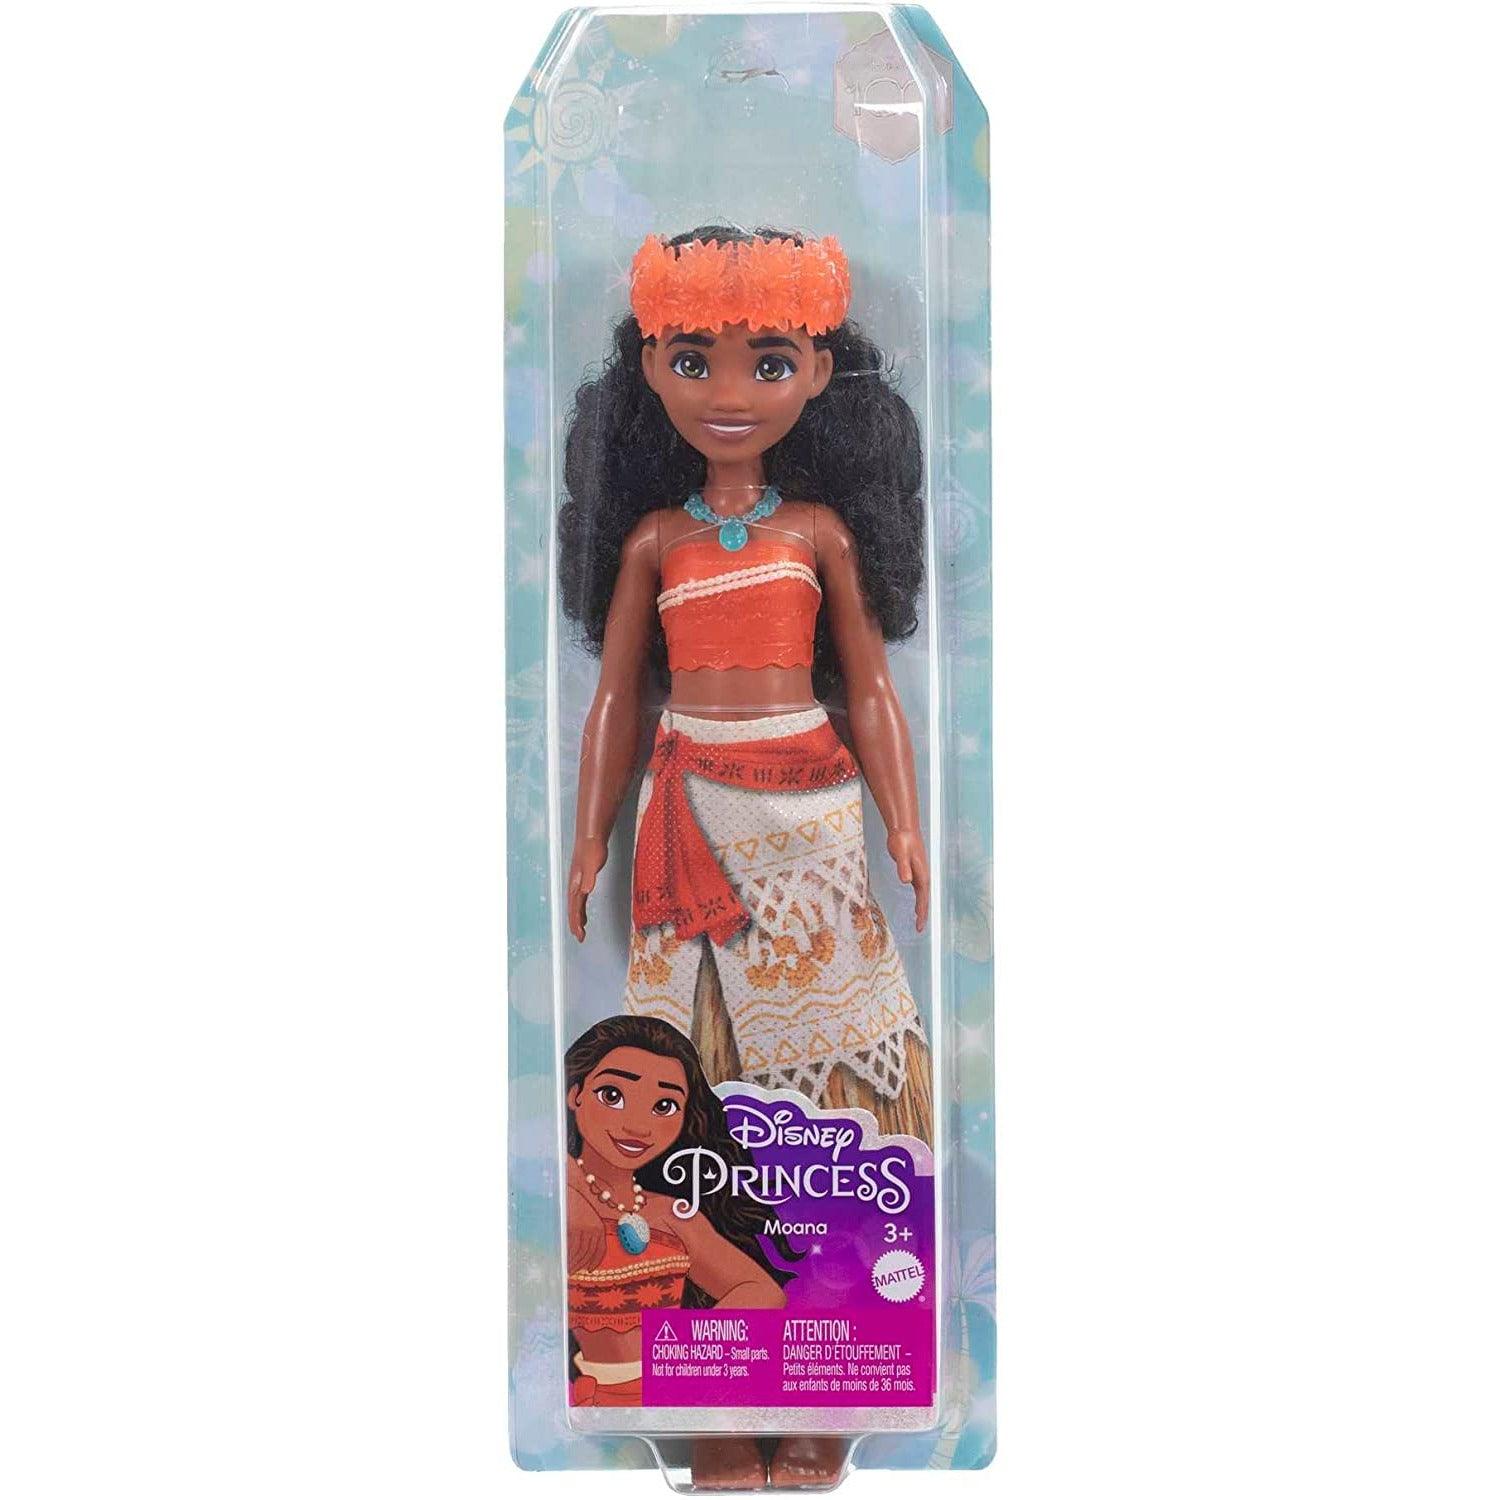 Mattel Disney Princess Moana Fashion Doll, Sparkling Look with Brown Hair, Brown Eyes & Hair Accessory - BumbleToys - 5-7 Years, Boys, Disney Princess, Fashion Dolls & Accessories, Girls, Mattel, Pre-Order